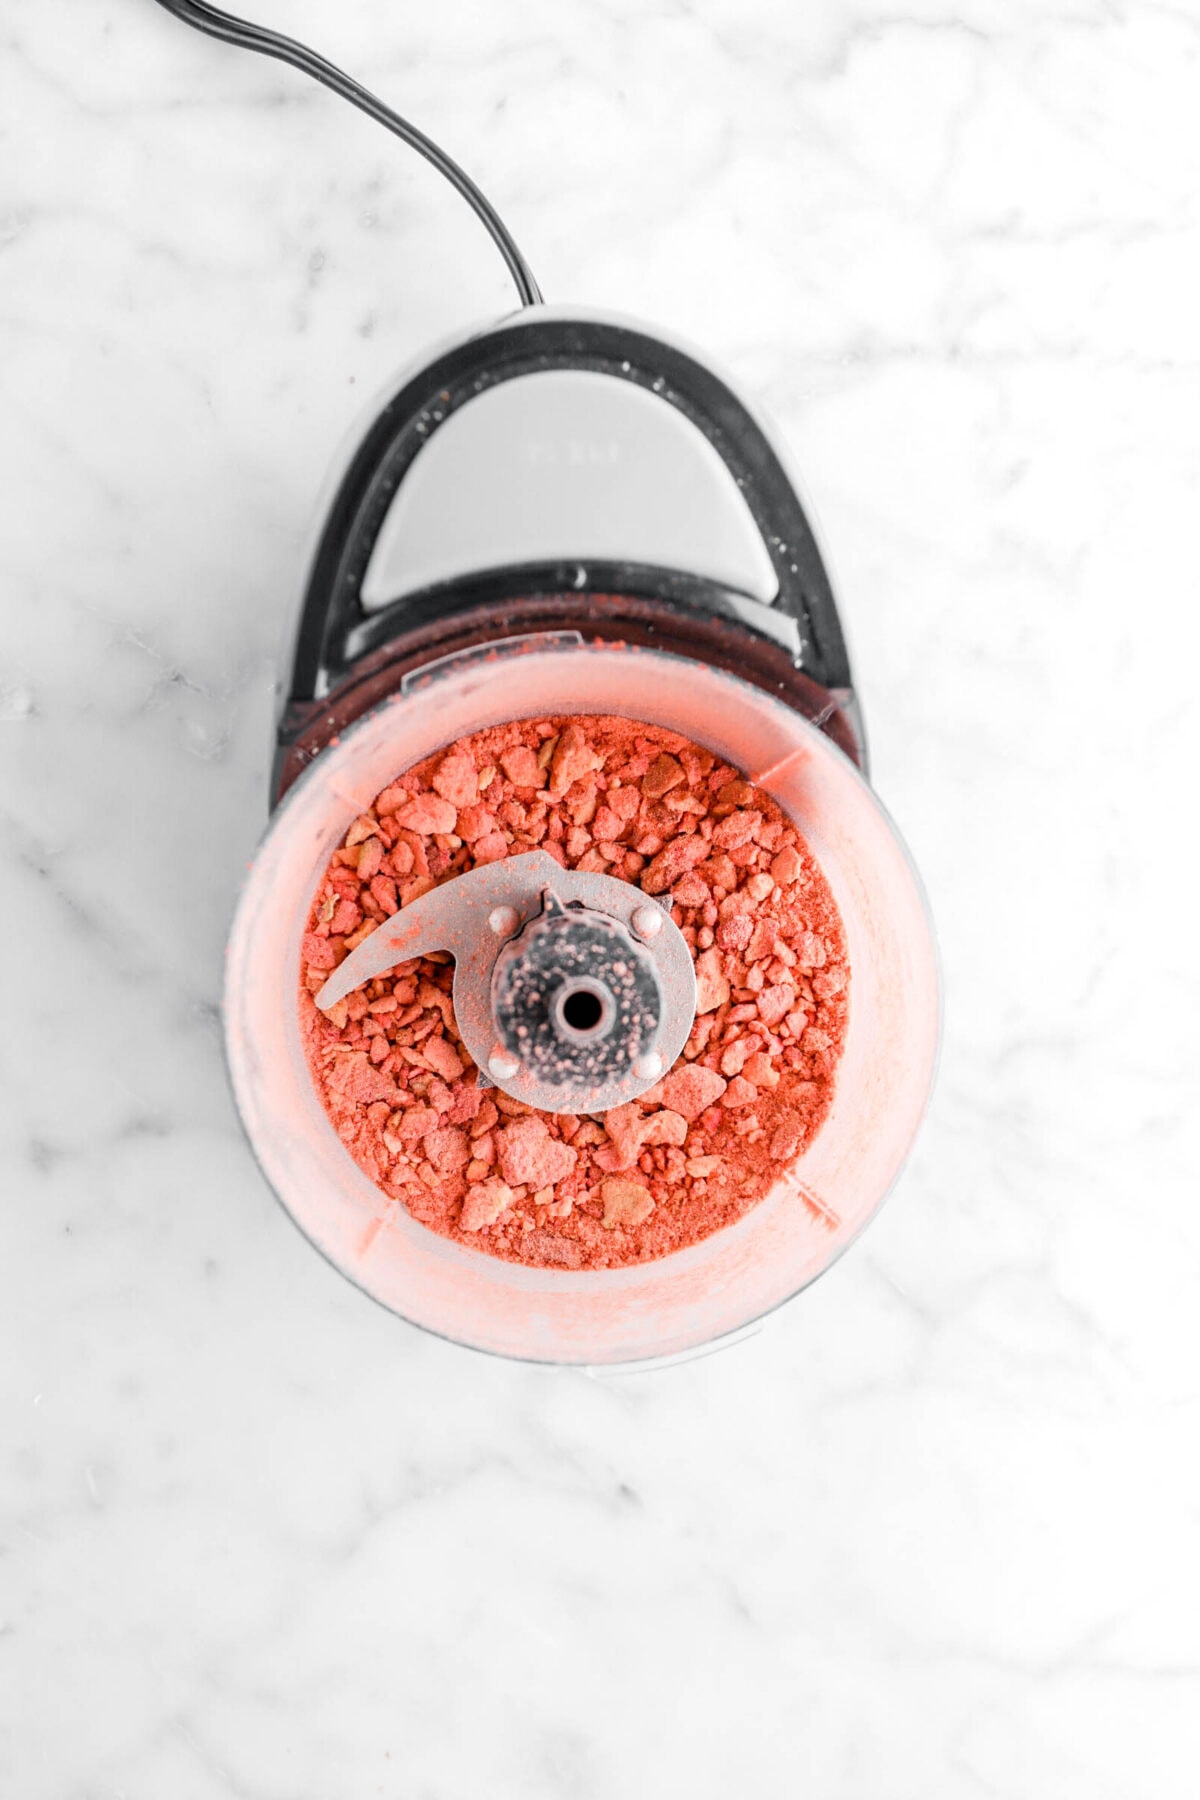 strawberry powder in small food processor